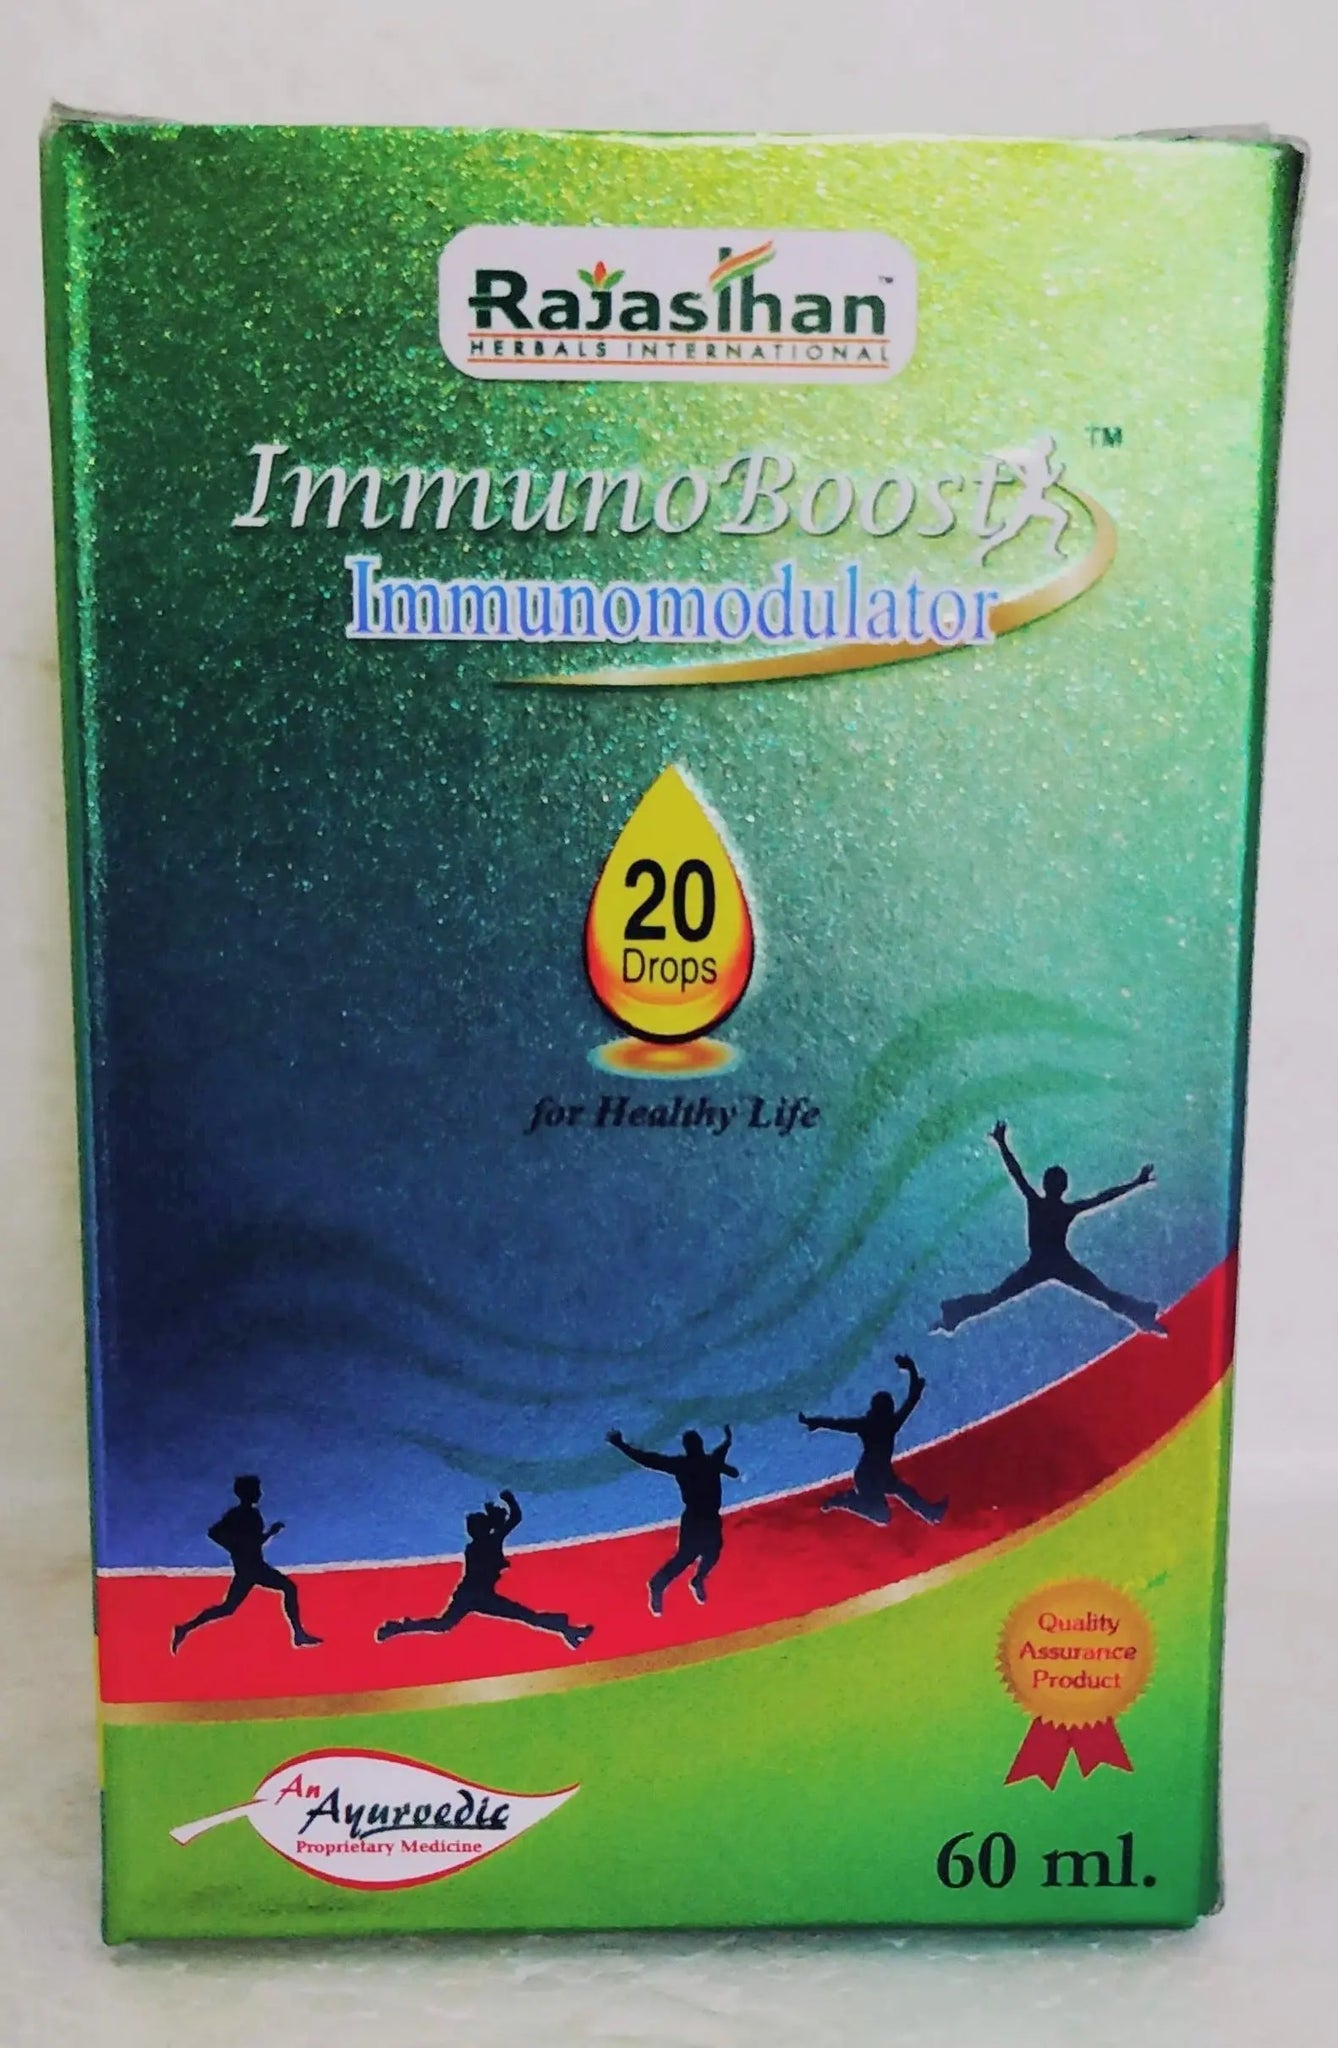 Immunoboost Immunomodulator drops 60ml Rajasthan Herbals